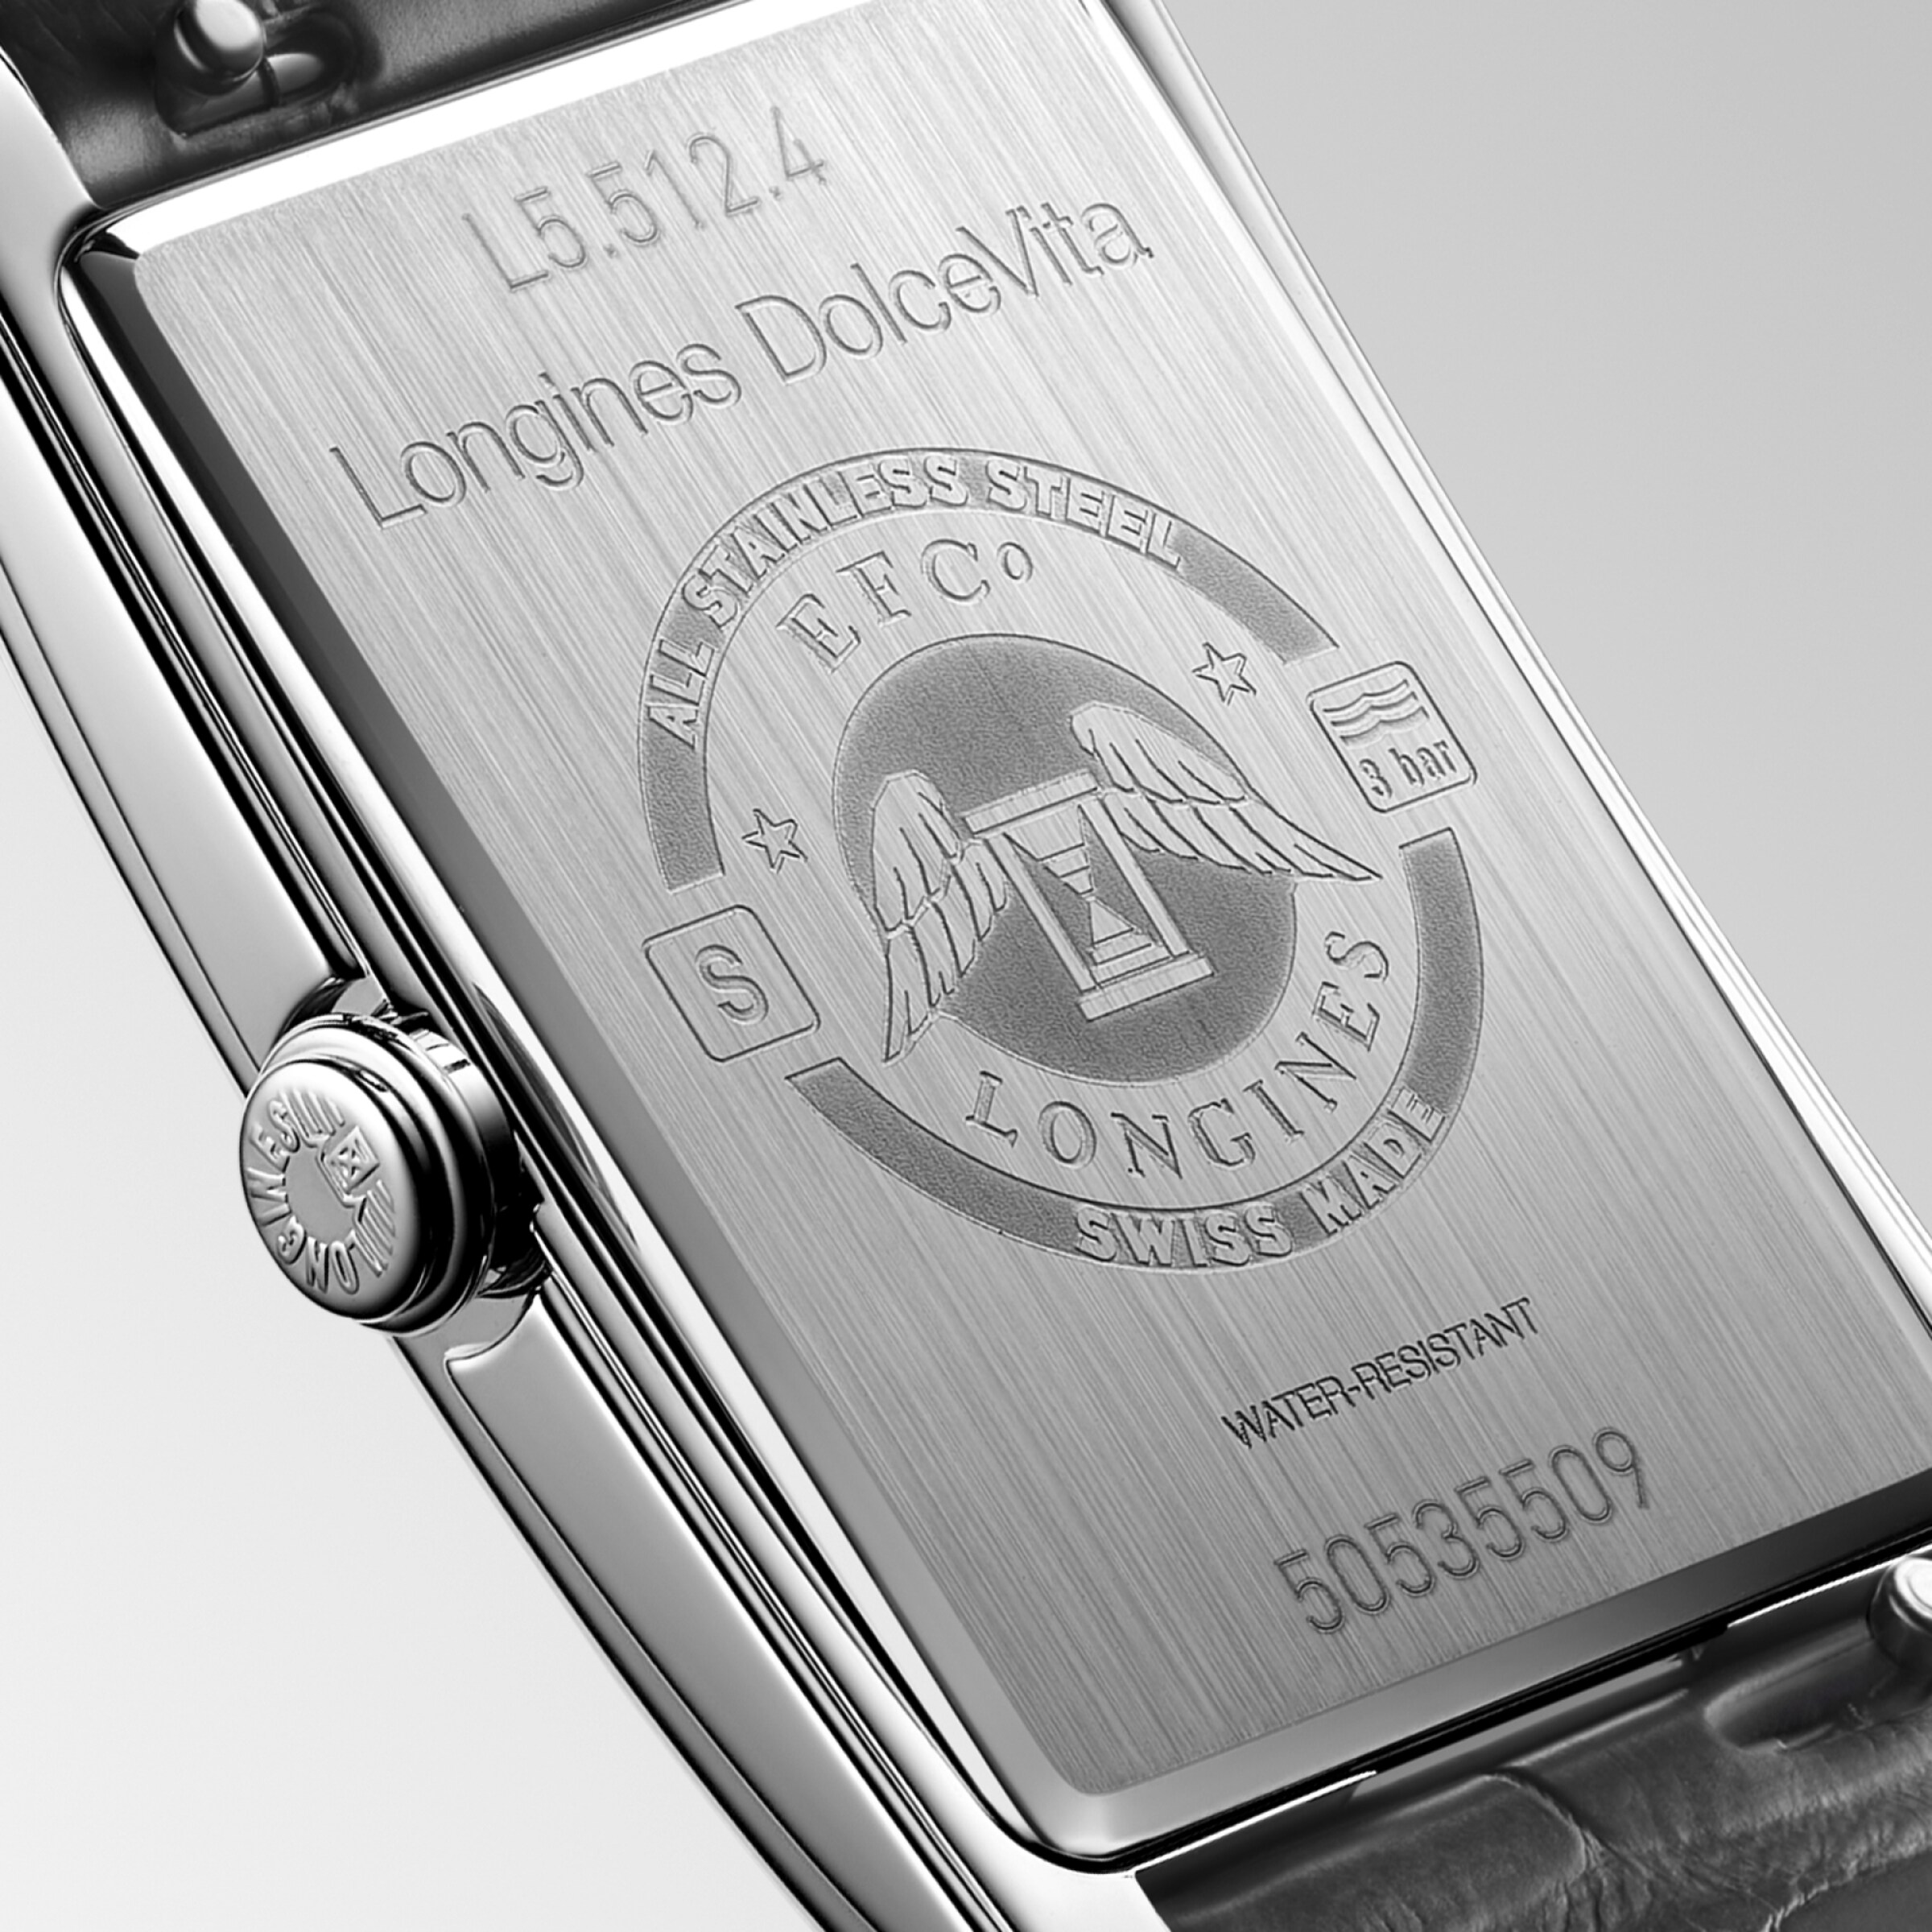 Longines DOLCEVITA Quartz Stainless steel Watch - L5.512.4.75.2